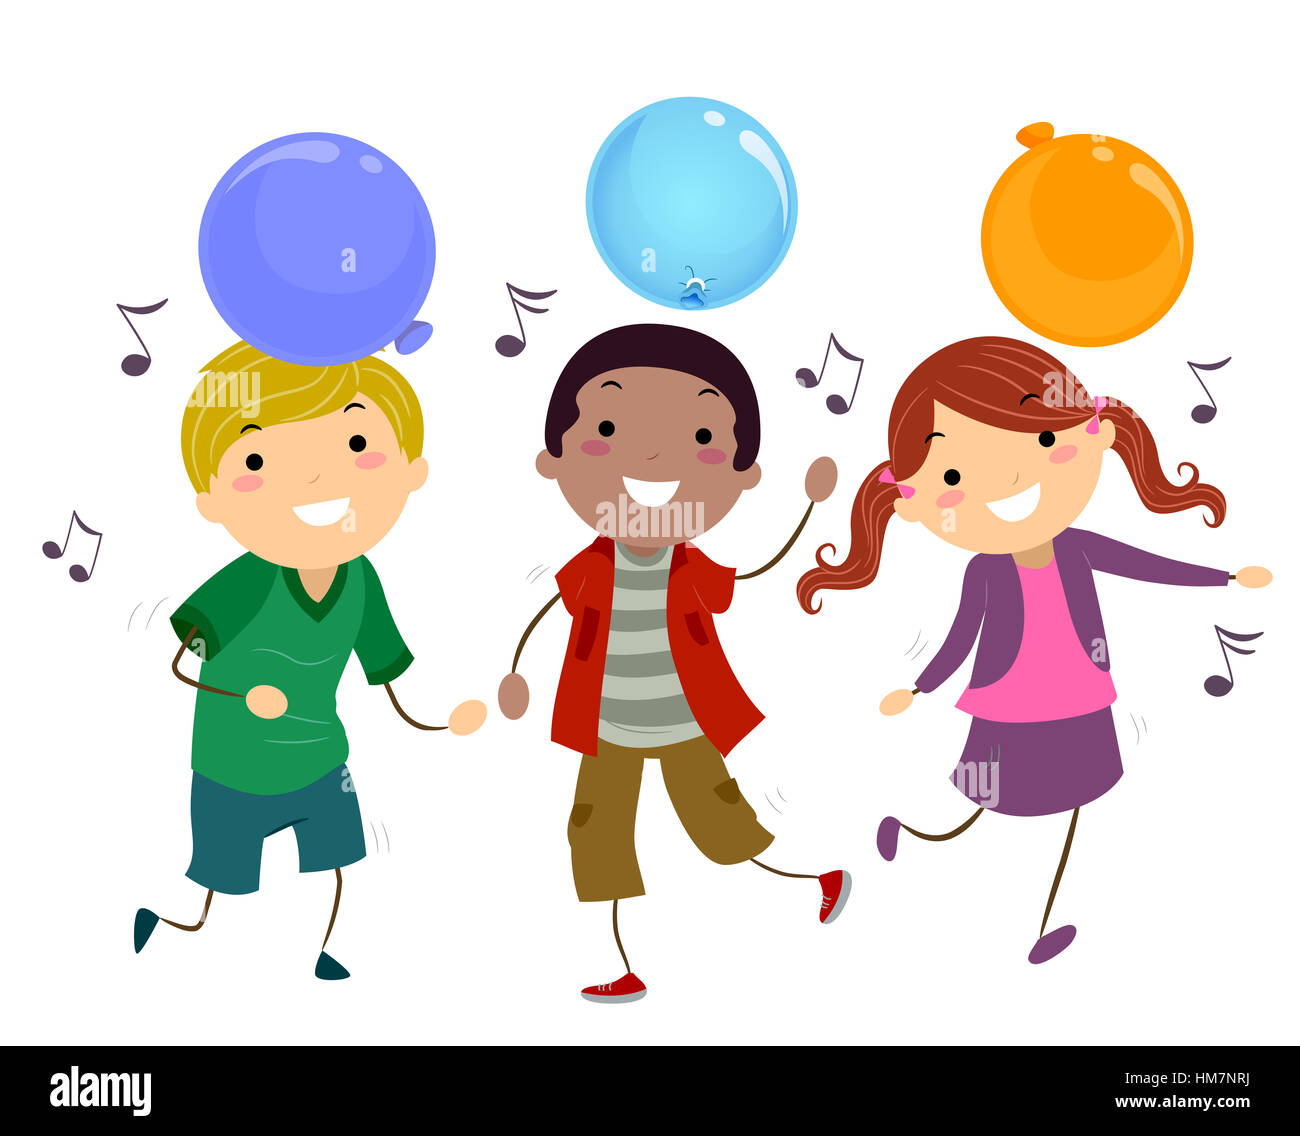 Stickman Illustration of Kids Dancing to Music Stock Photo